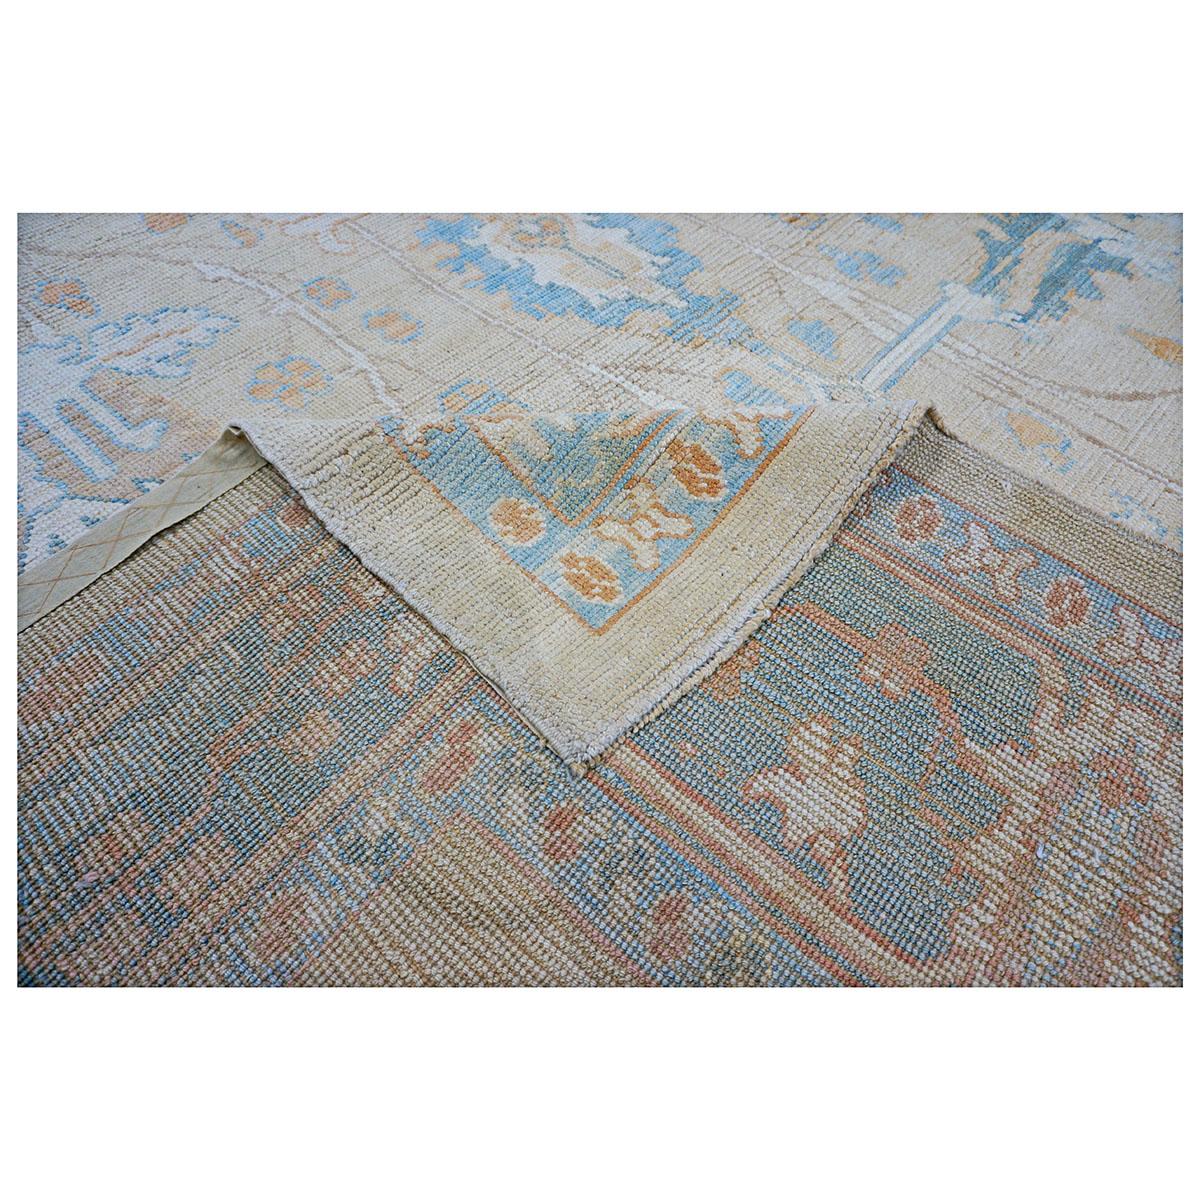 Hemp 21st Century William Morris Donegal Carpet 11x15 Tan, Light Blue and Orange Rug For Sale